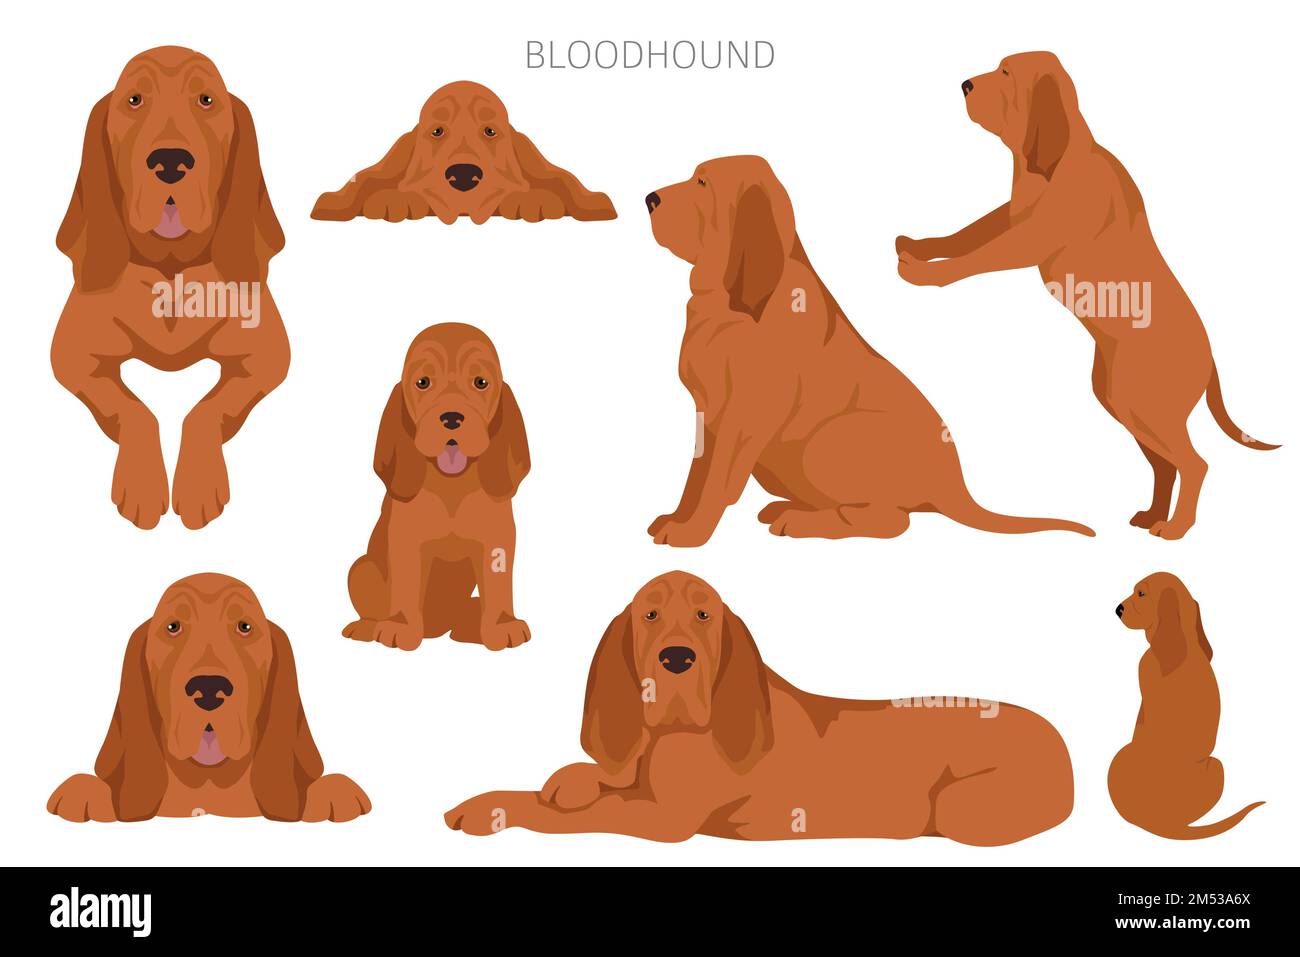 Bluthund-Clipart. Alle Mantelfarben eingestellt. Andere Position. Infografik zu den Merkmalen aller Hunderassen. Vektordarstellung Stock Vektor